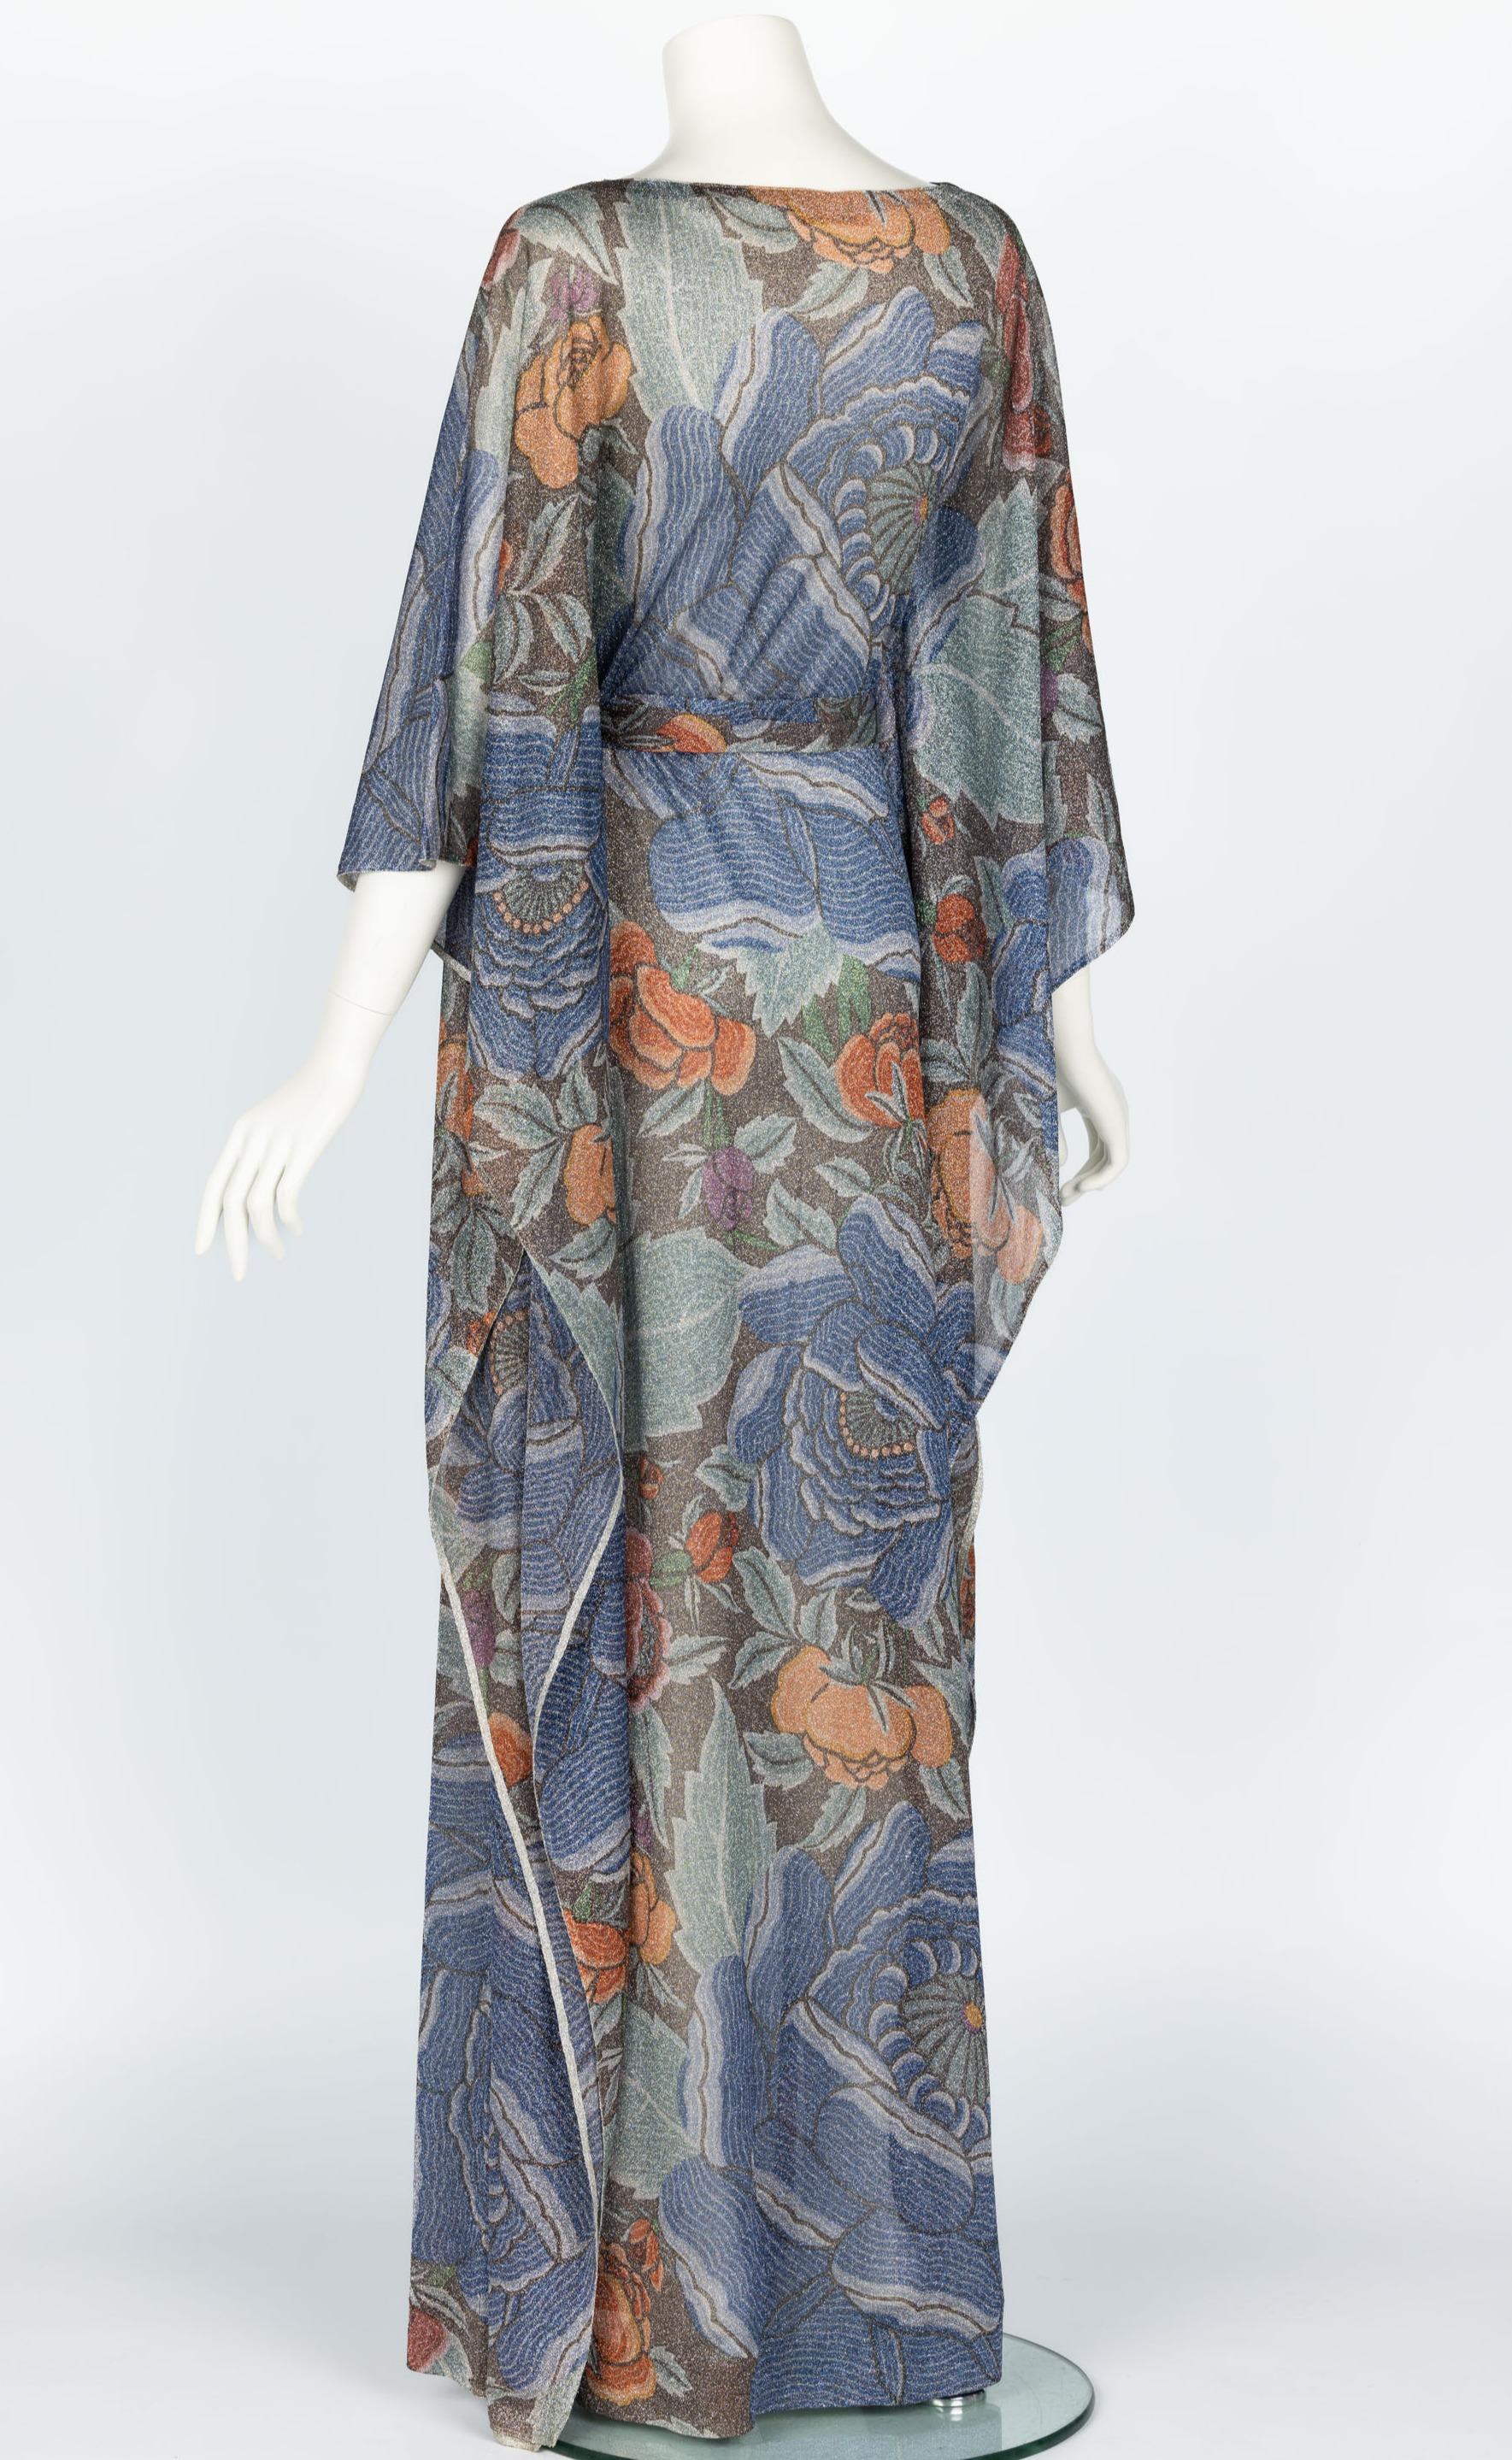 Iconic Missoni 1970s Floral Print Metallic Lurex Caftan Dress  For Sale 2